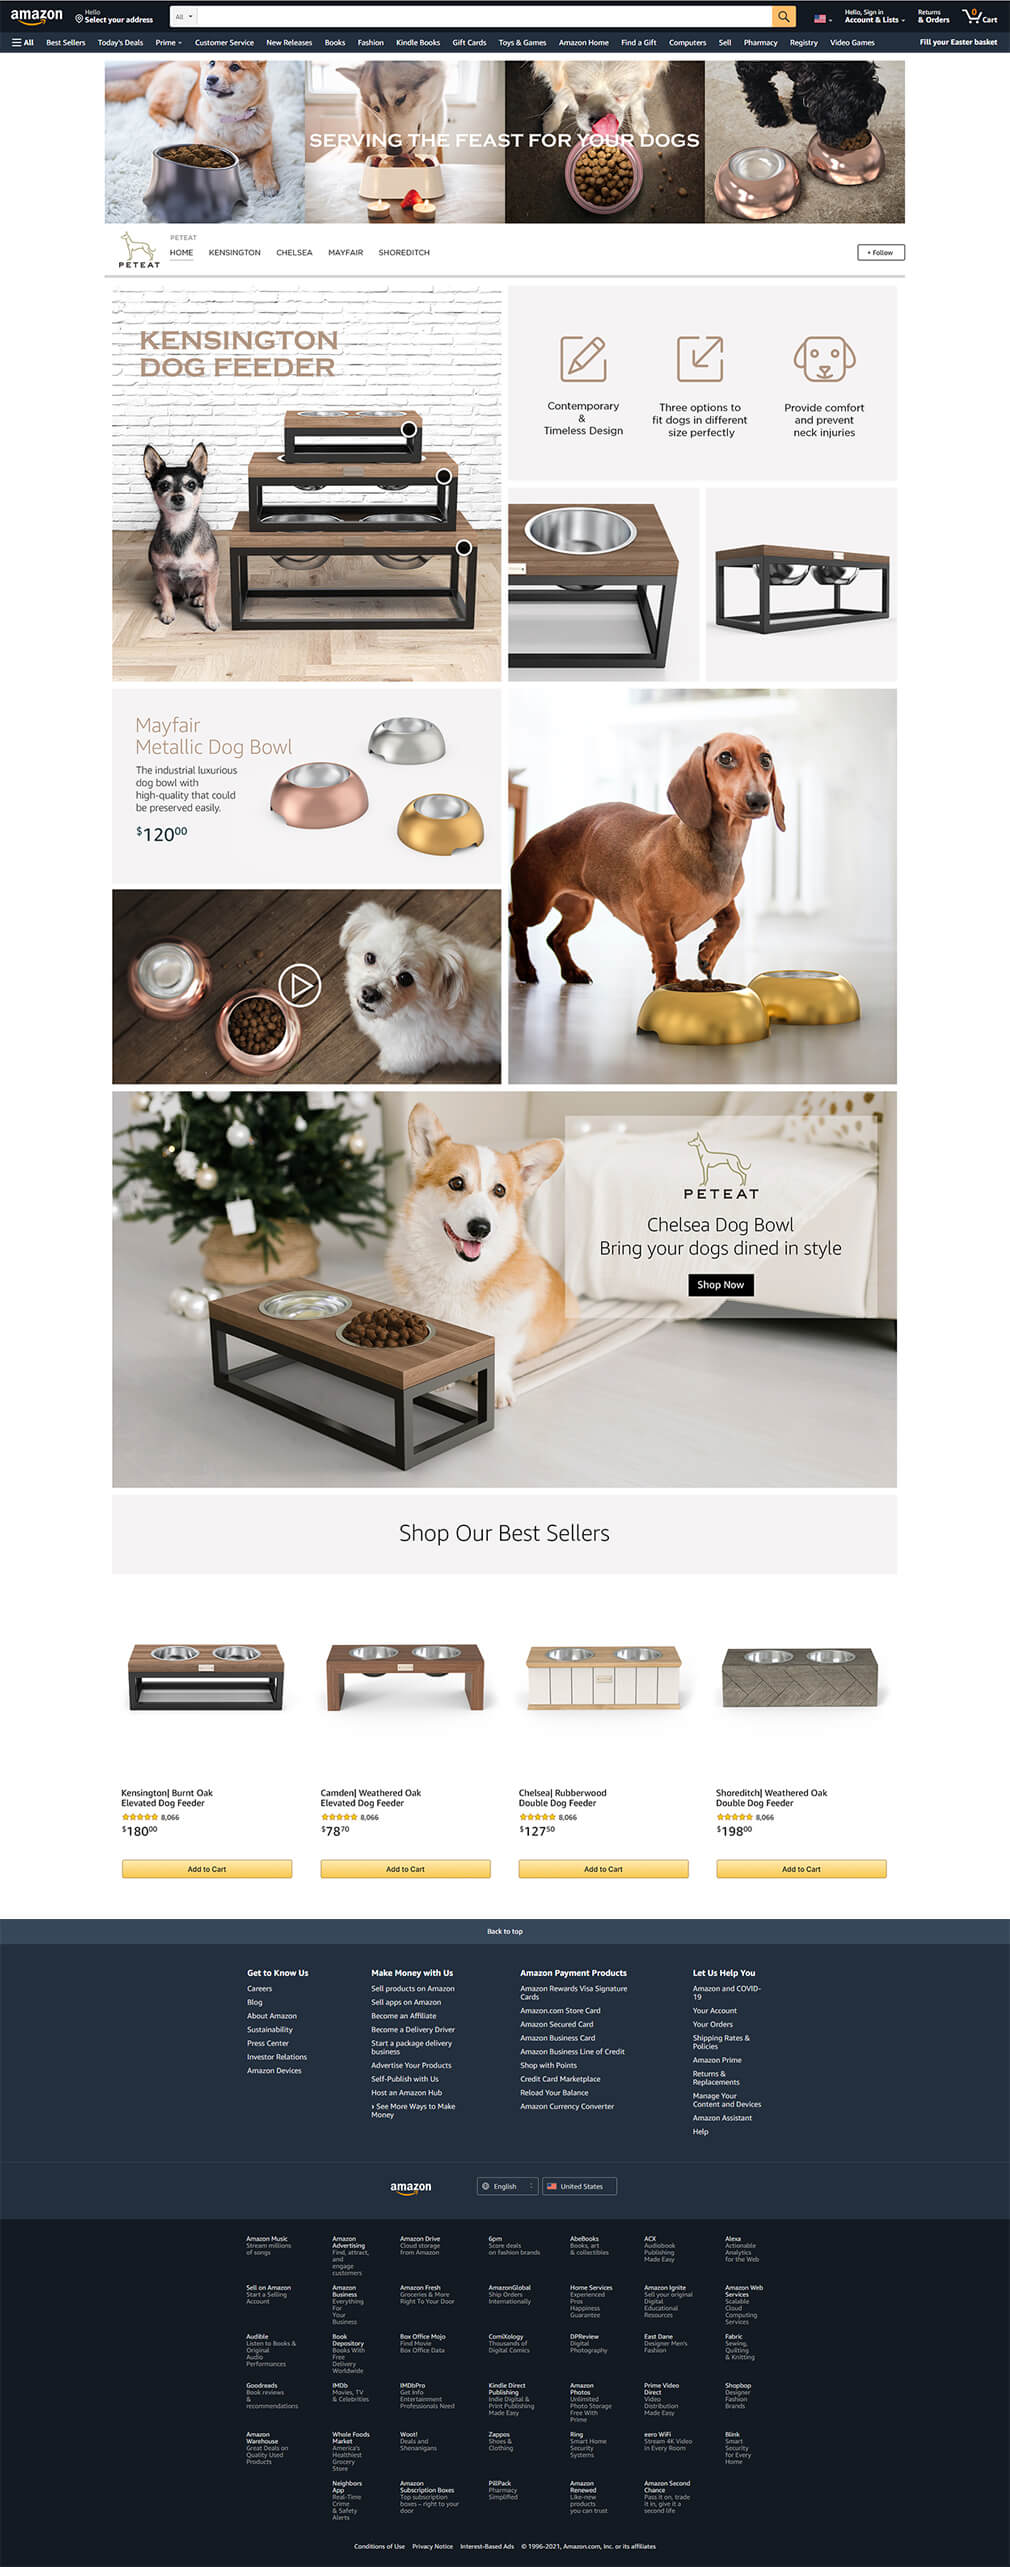 Amazon Storefront Templates-Peteat-Dogbowl